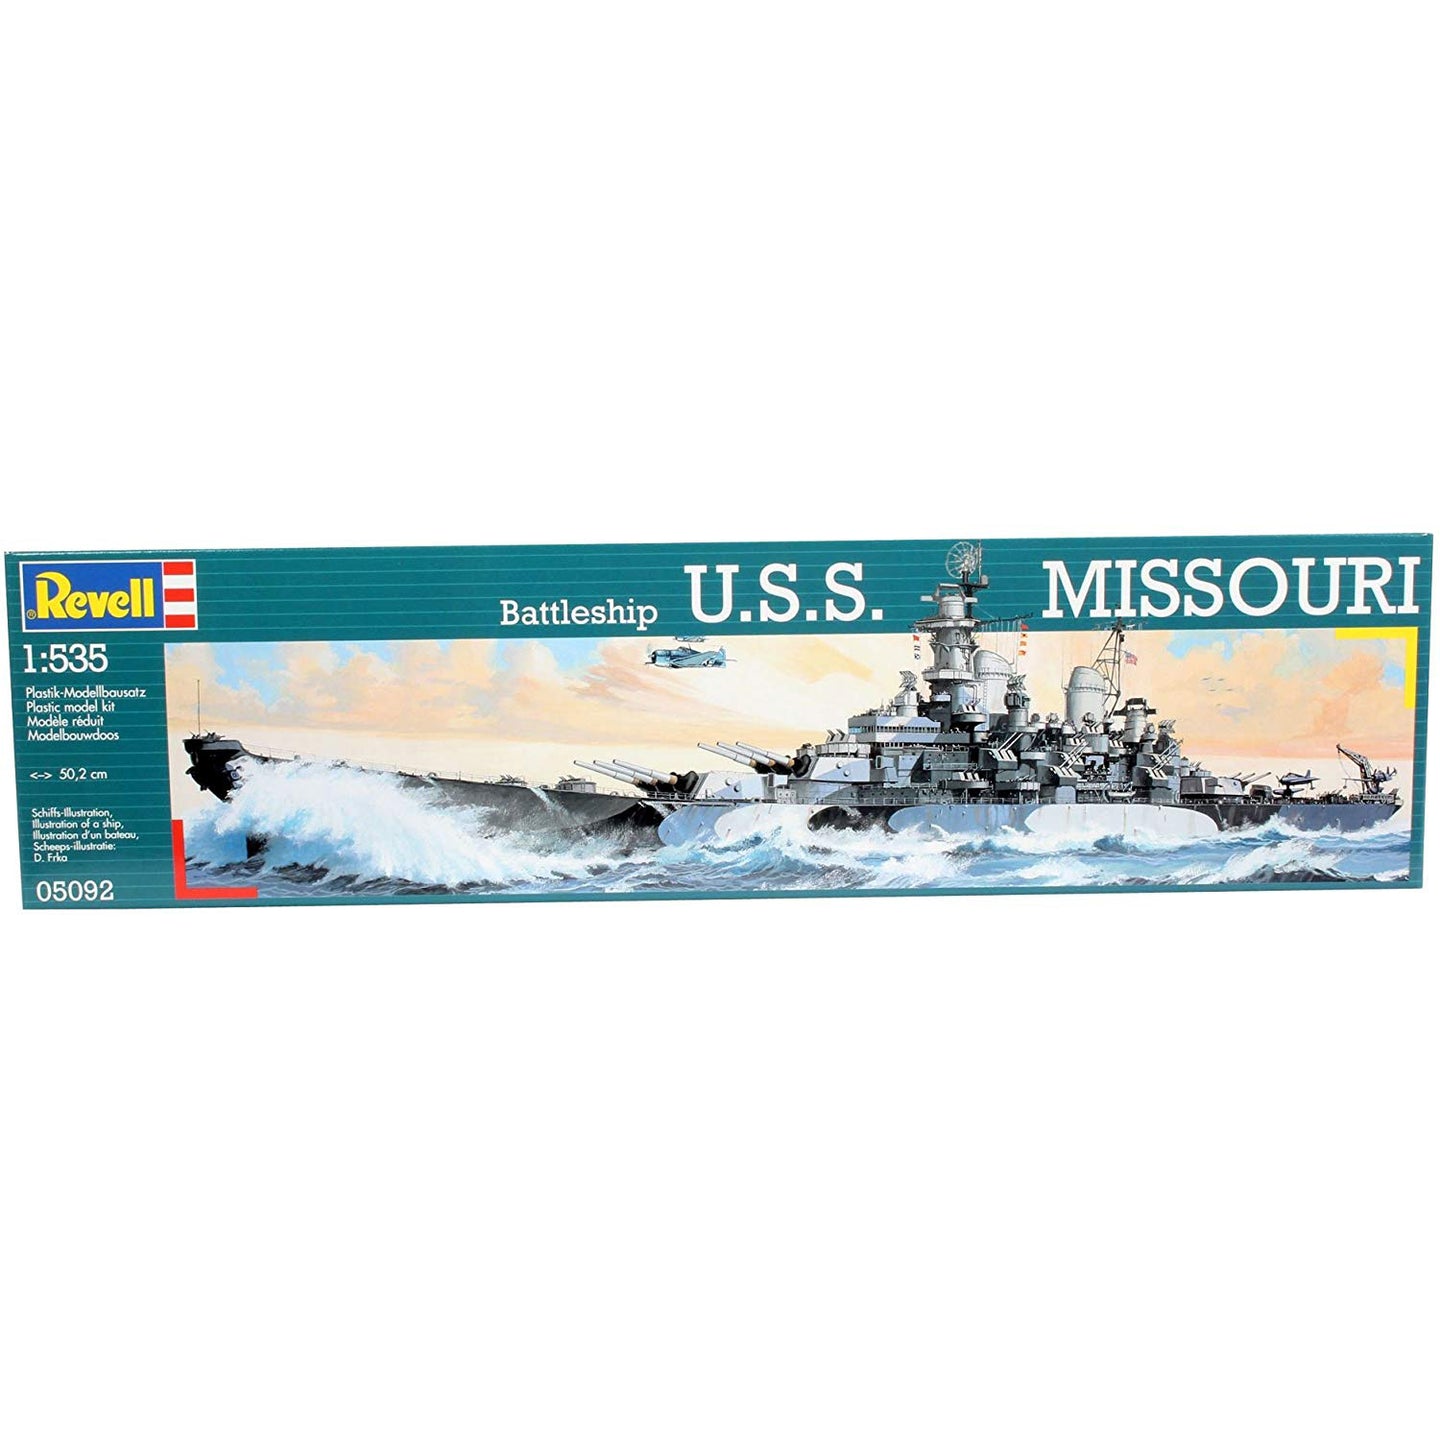 Revell 1/535 USS Missouri Battleship 05092